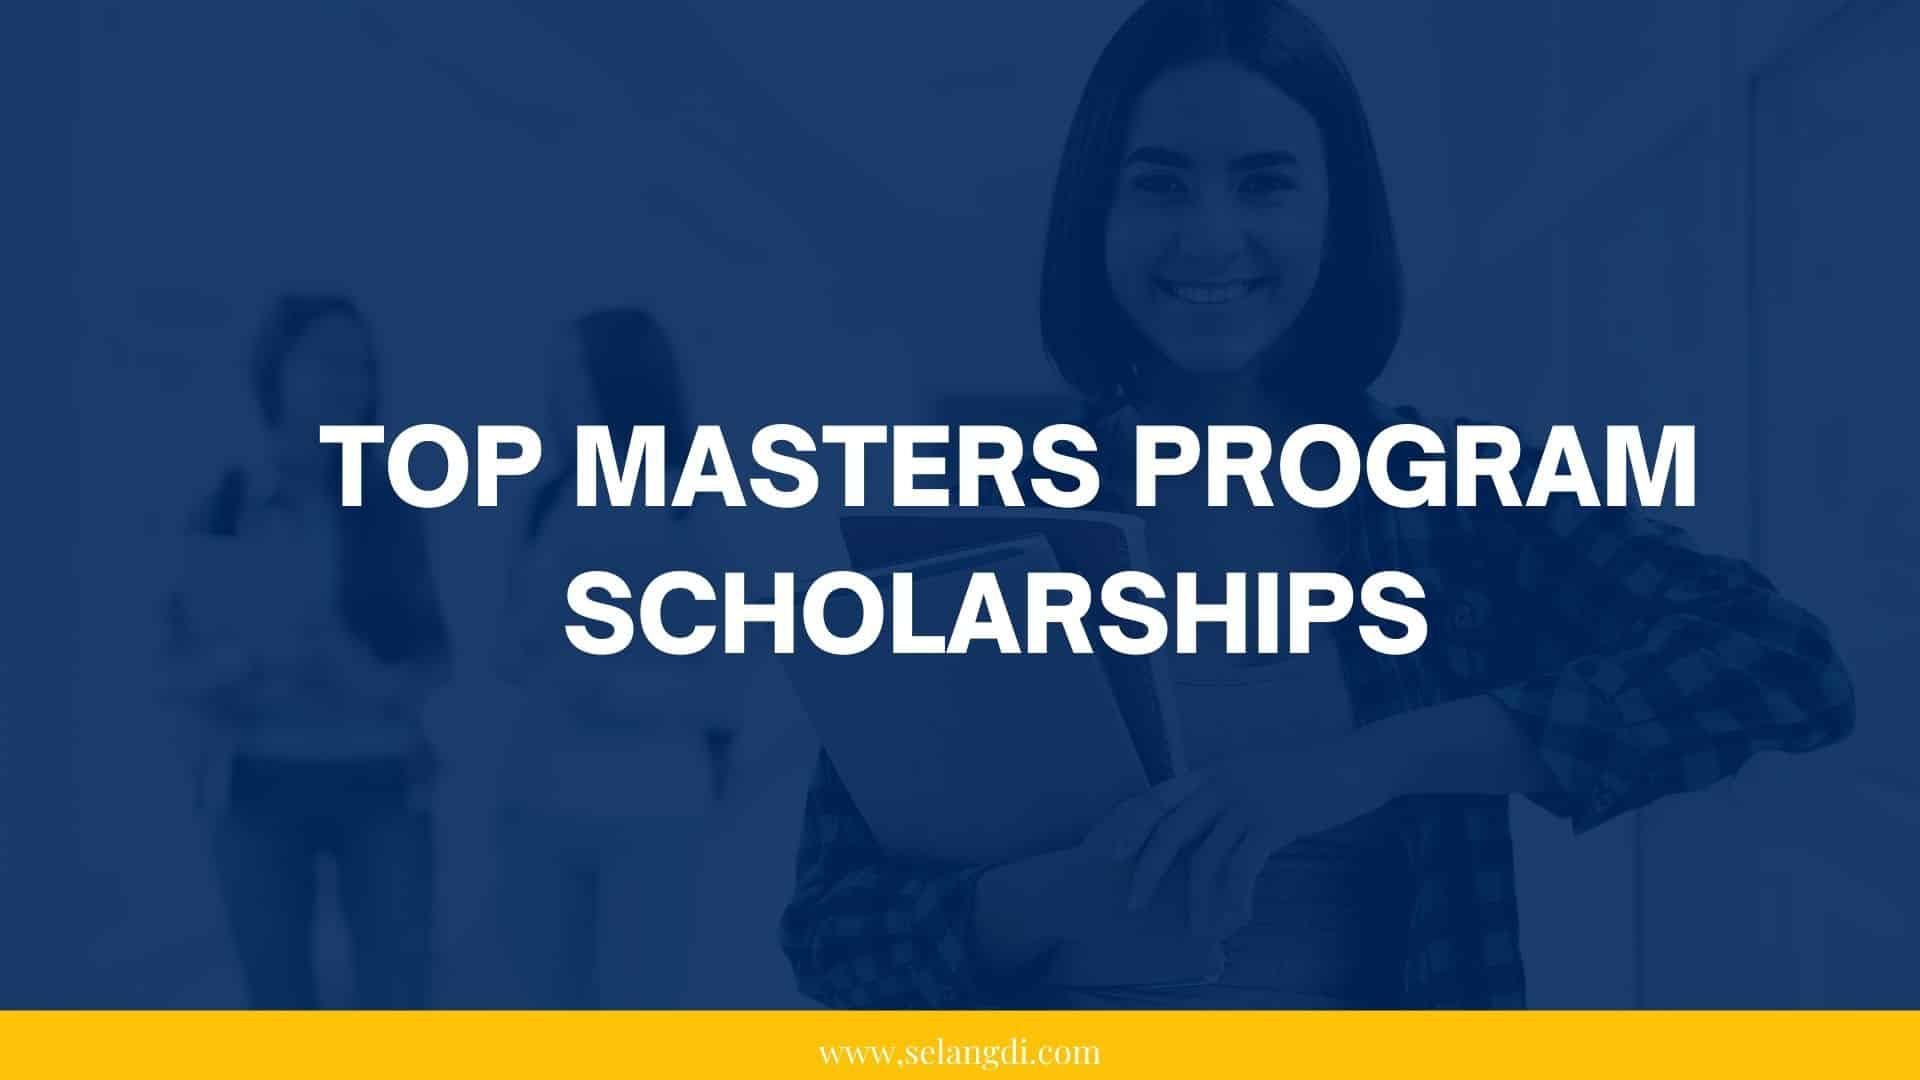 Top Masters Program Scholarships